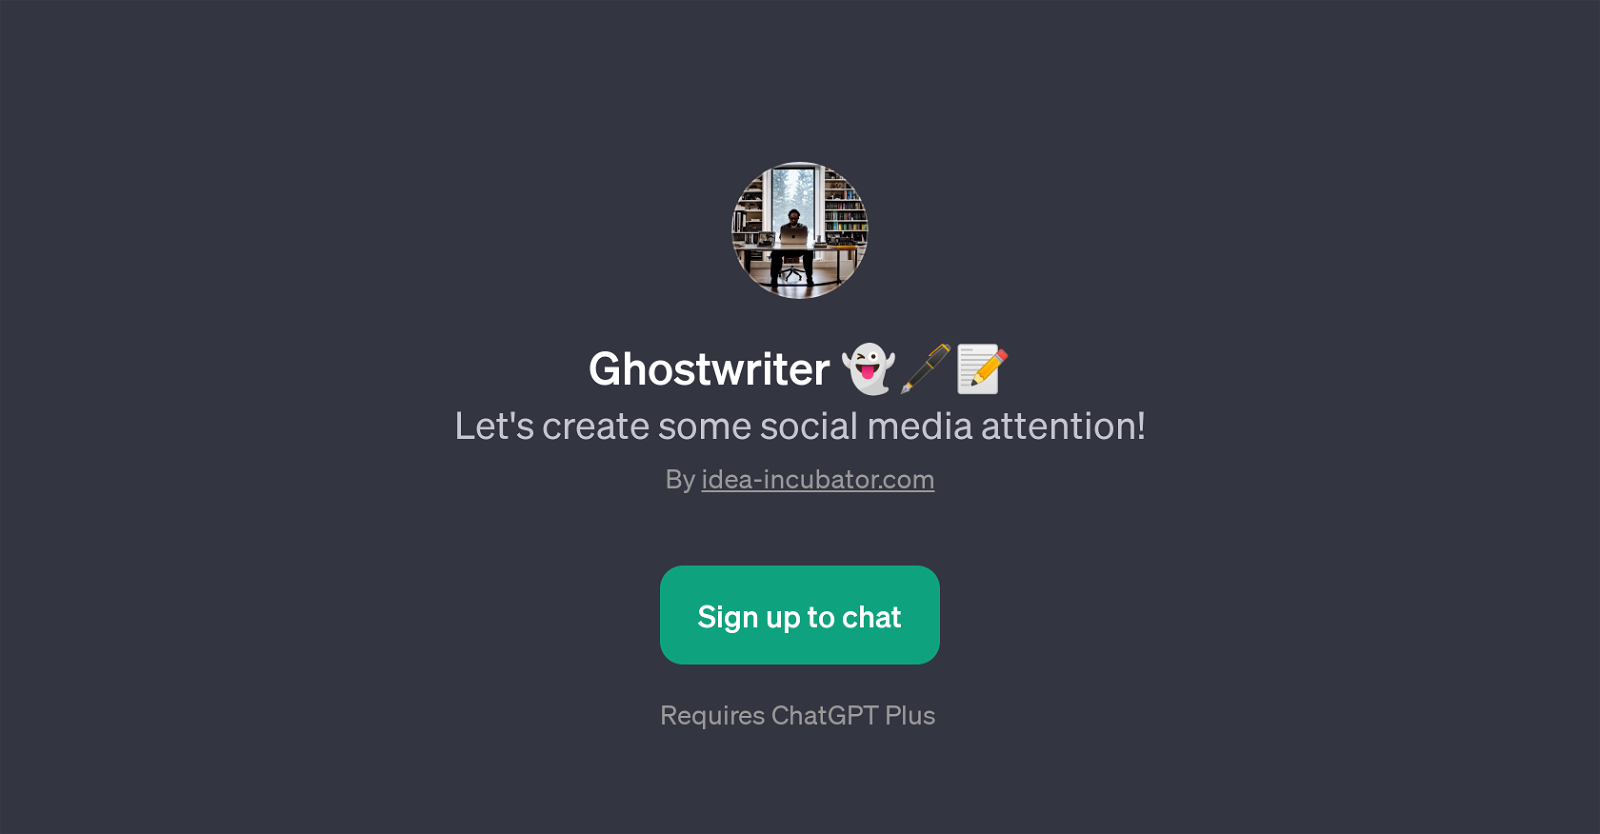 GhostwriterGPT website